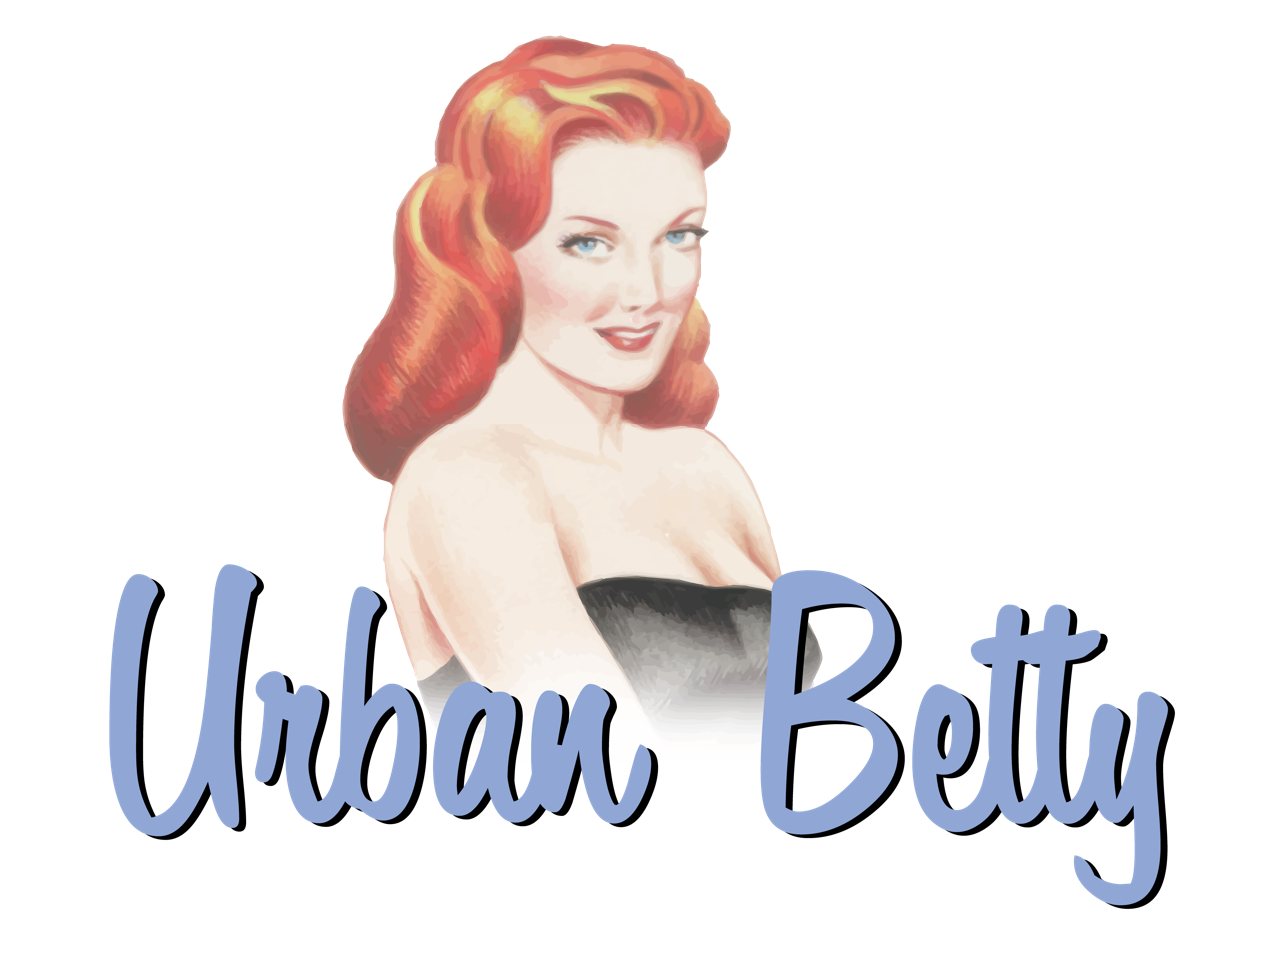 Urban Betty